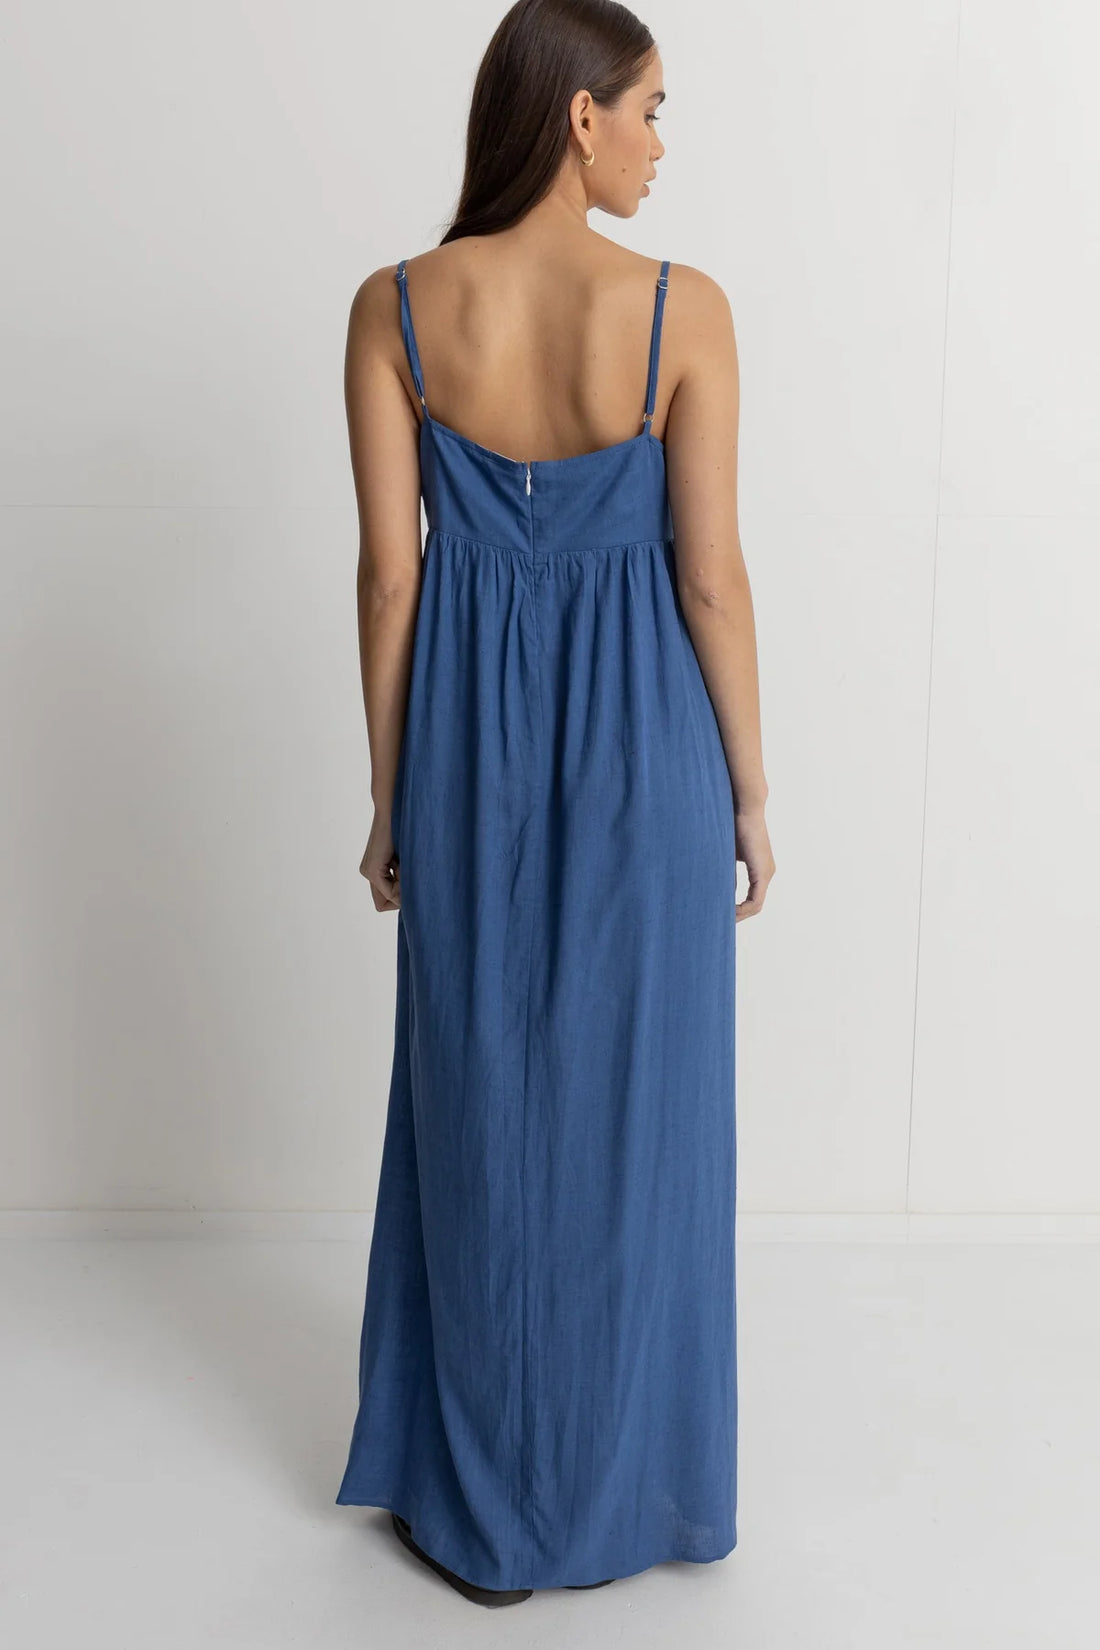 LOST IN LUNAR AVIA MAXI DRESS - CITRUS – OAK CLOTHING CO. INC.